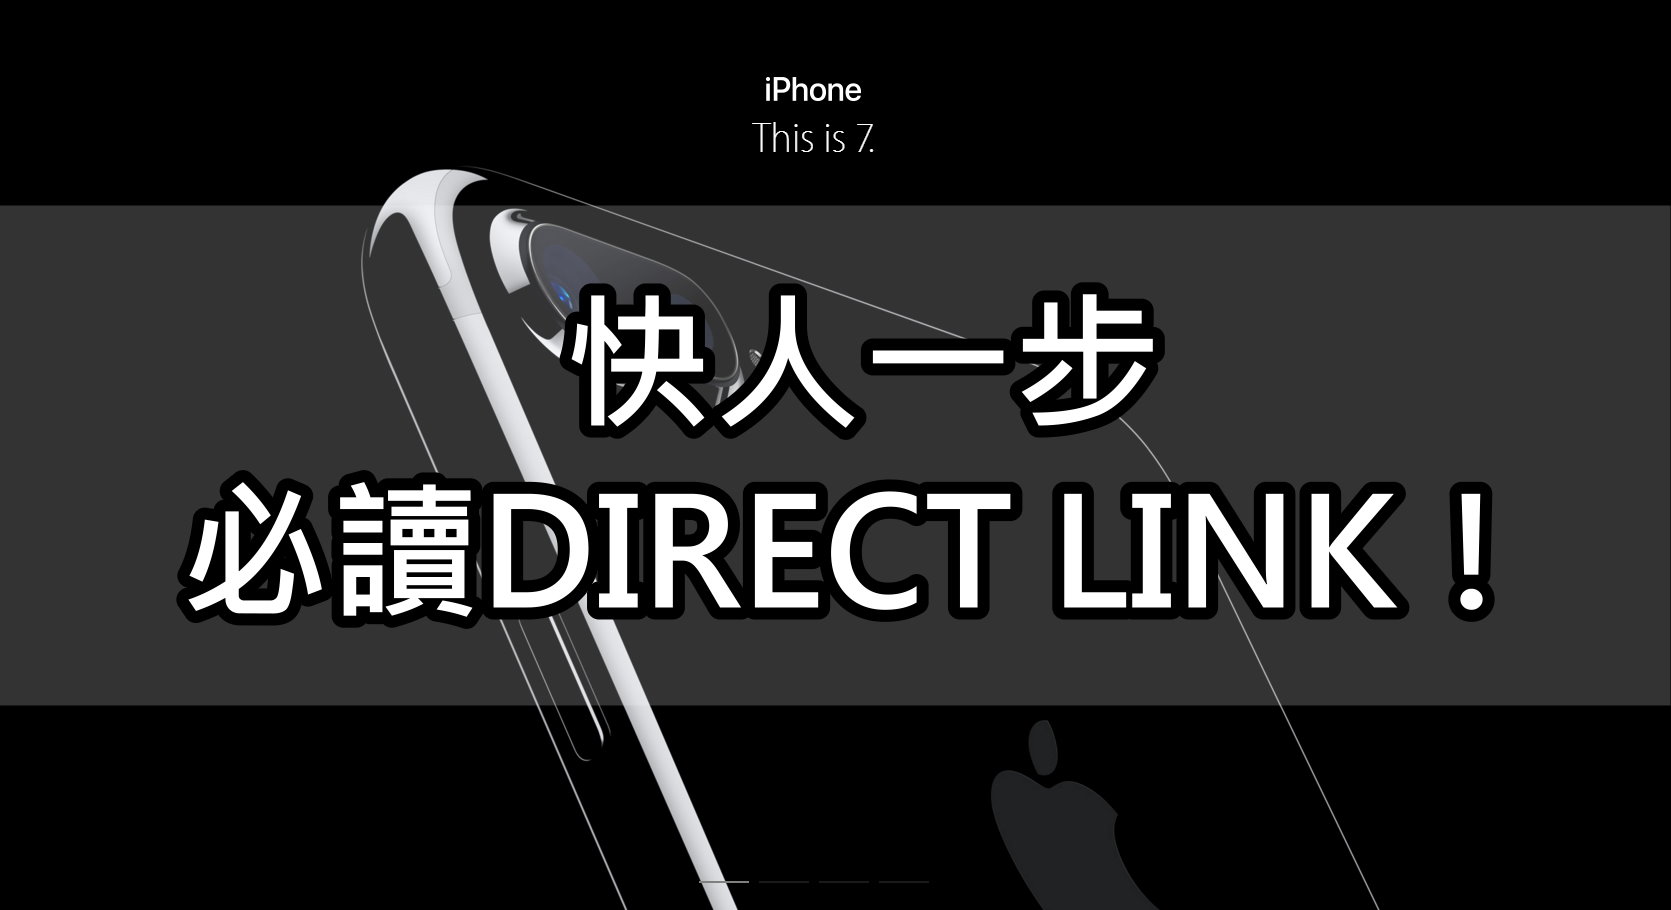 快人一步預訂iPhone 7，必讀AOS DIRECT LINK！